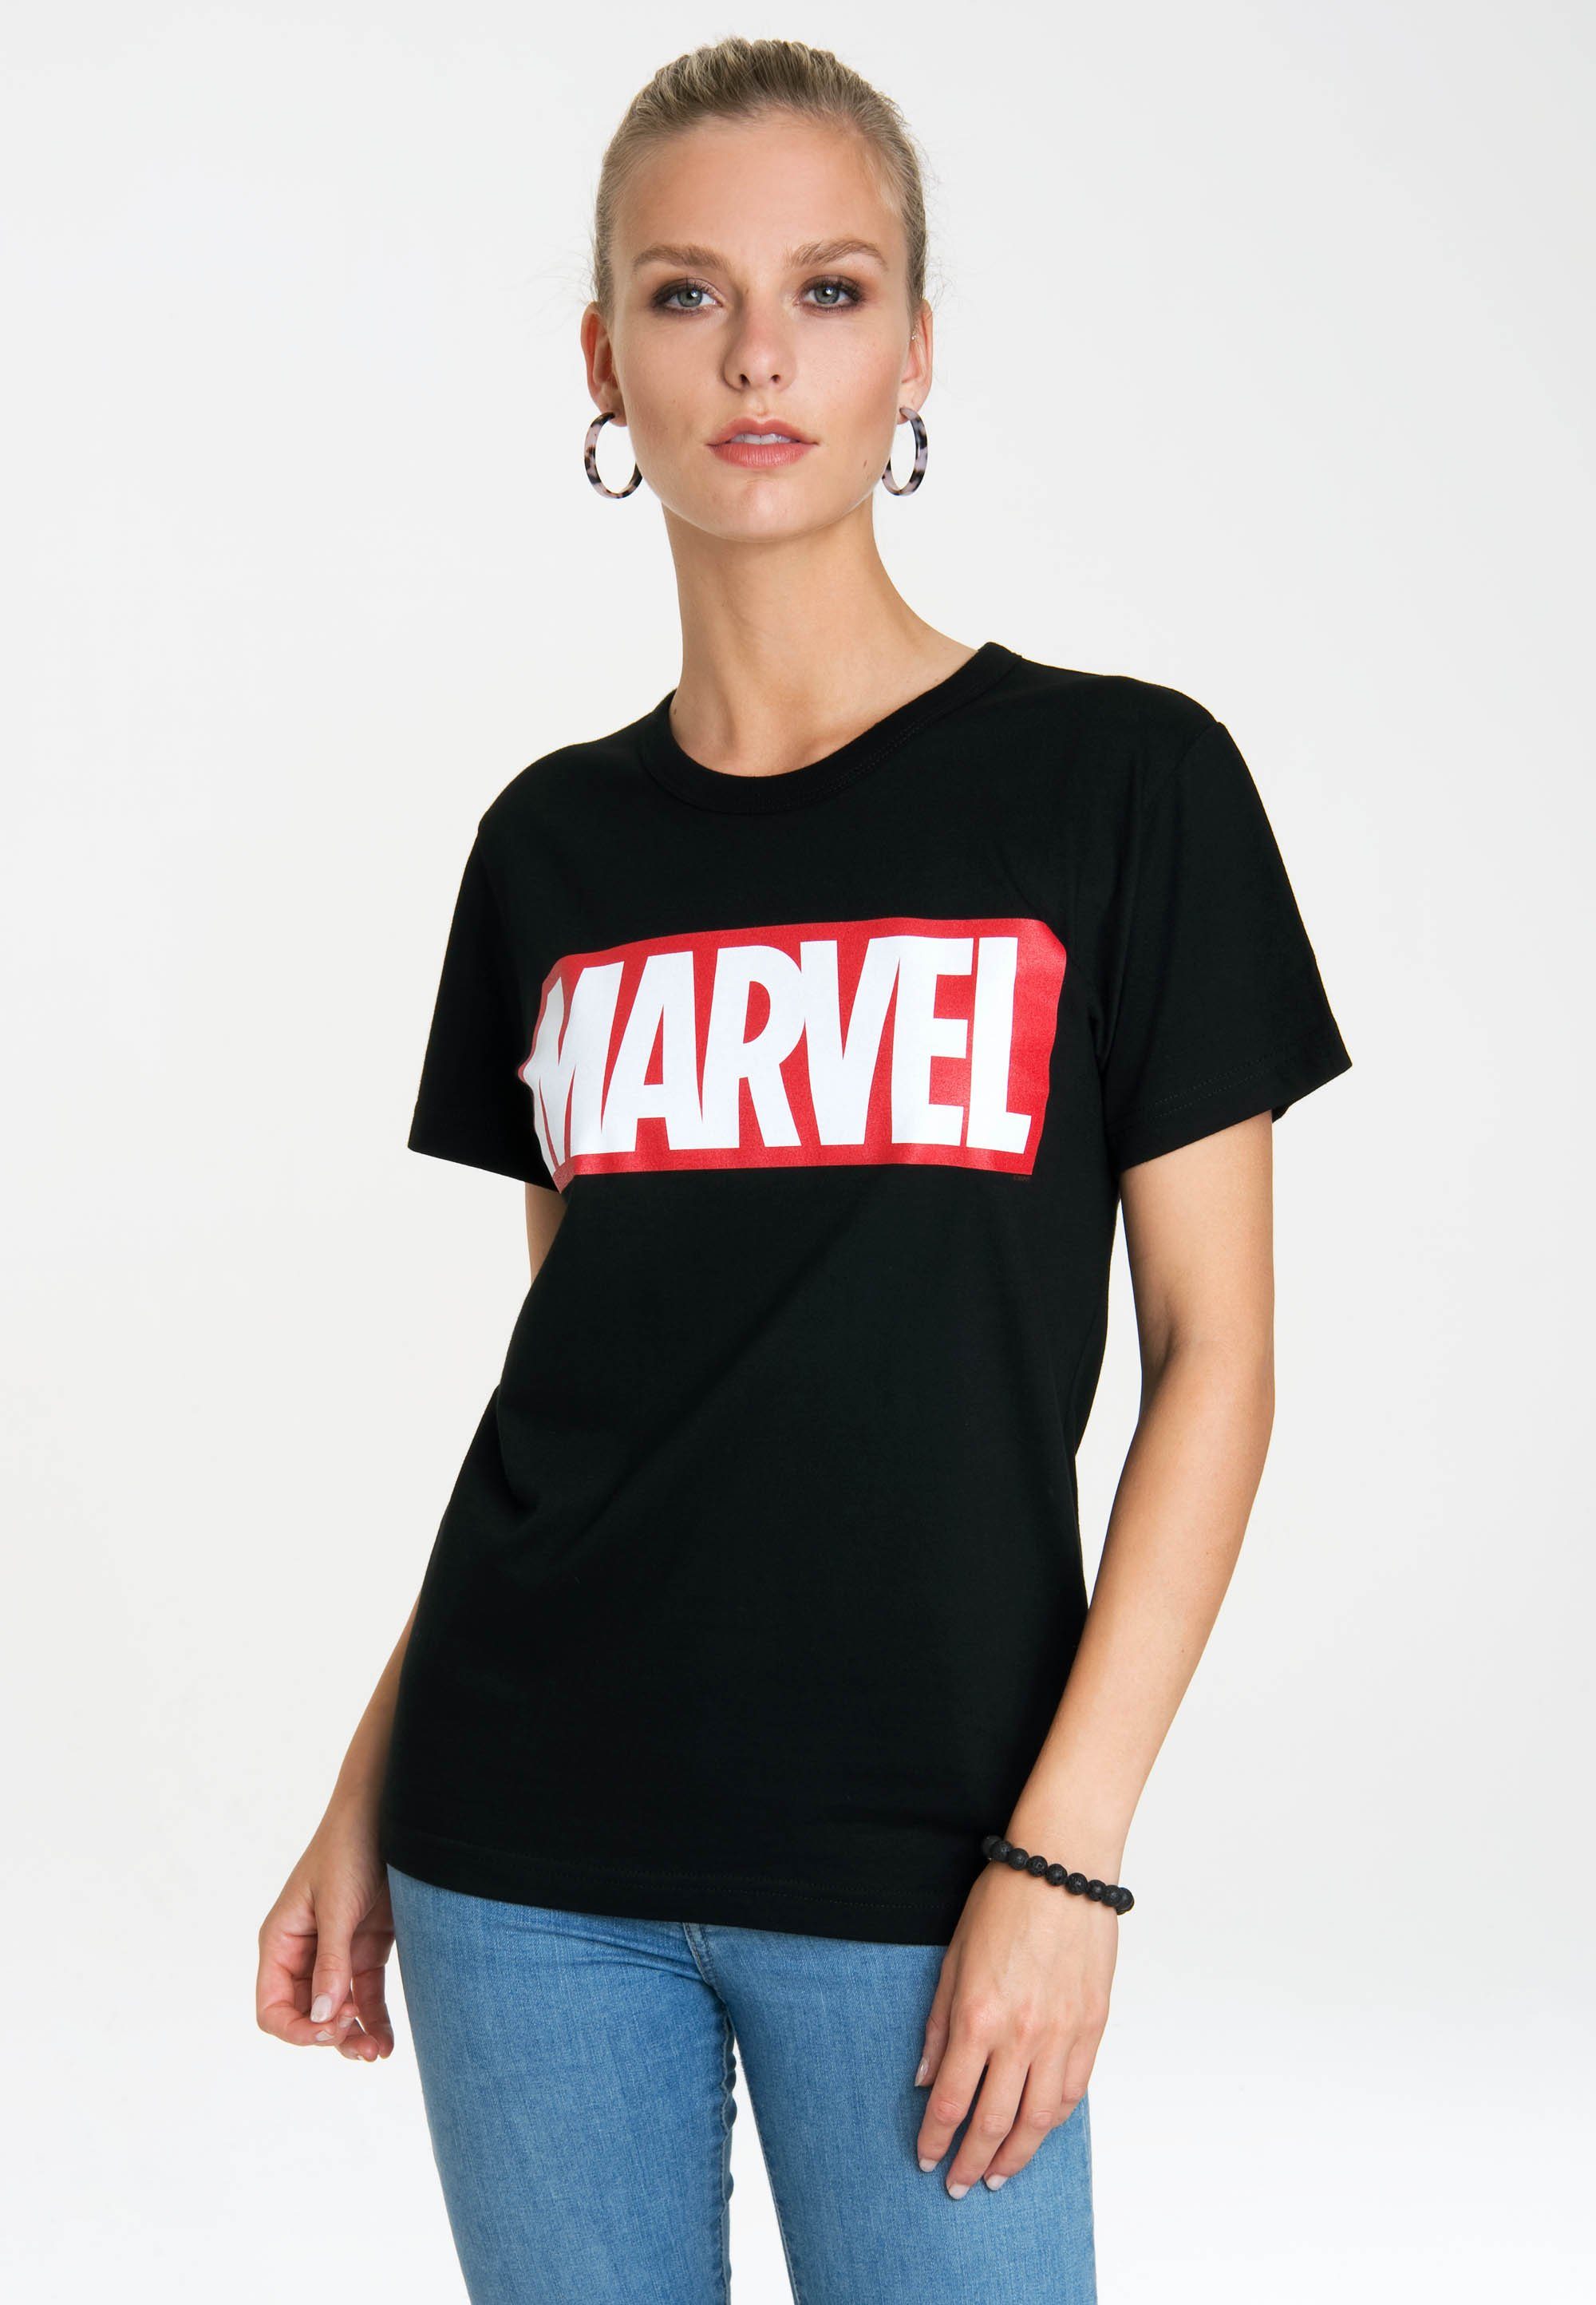 mit T-Shirt lizenziertem Marvel Originaldesign LOGOSHIRT Comics